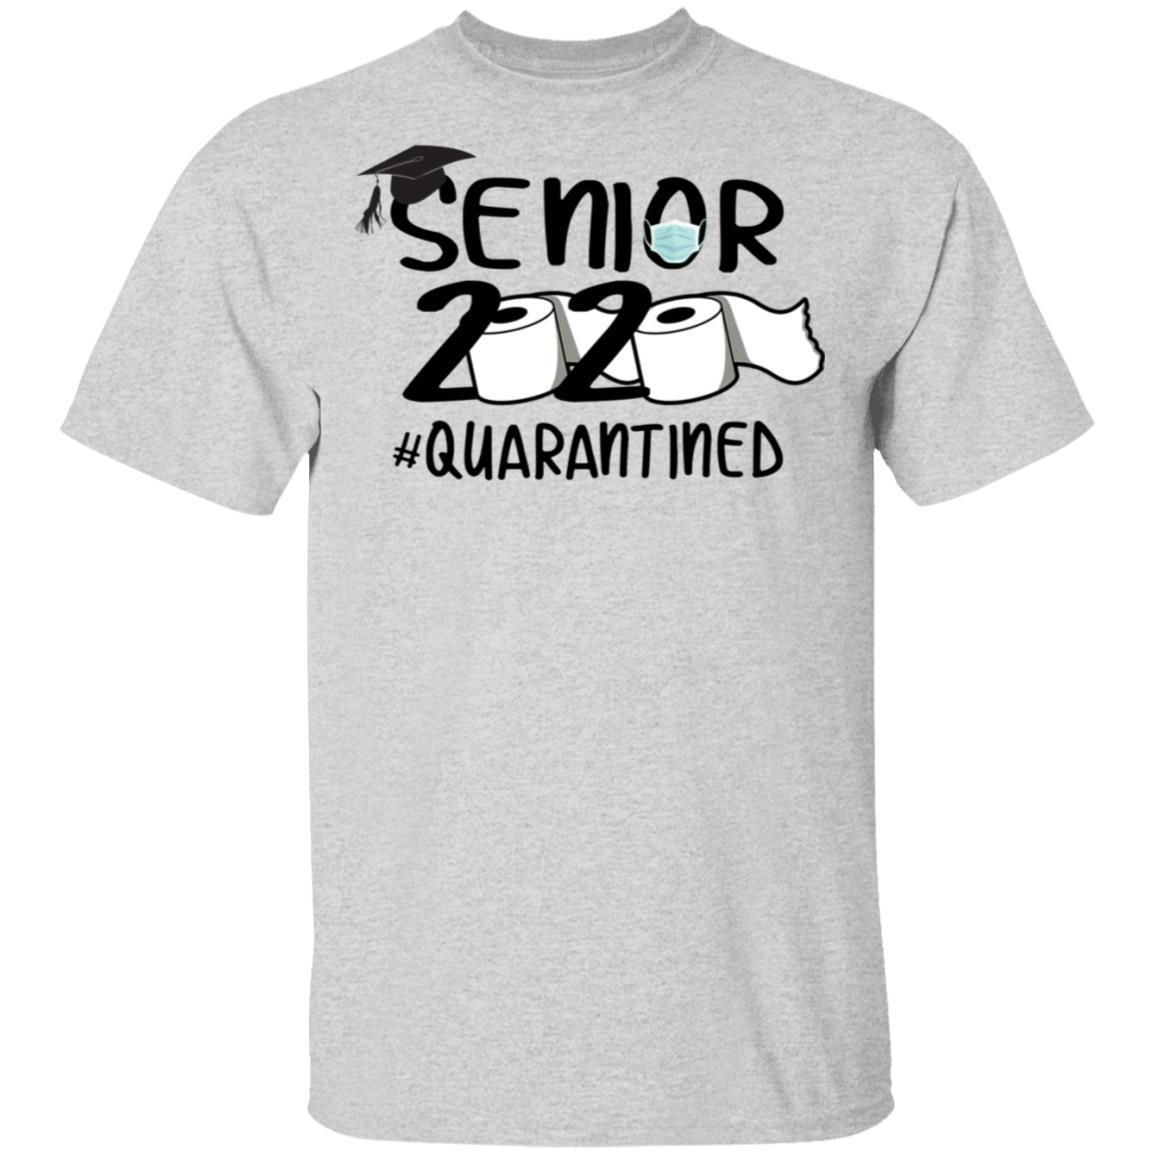 Senior 2020 Quarantined Toilet Paper Funny shirts